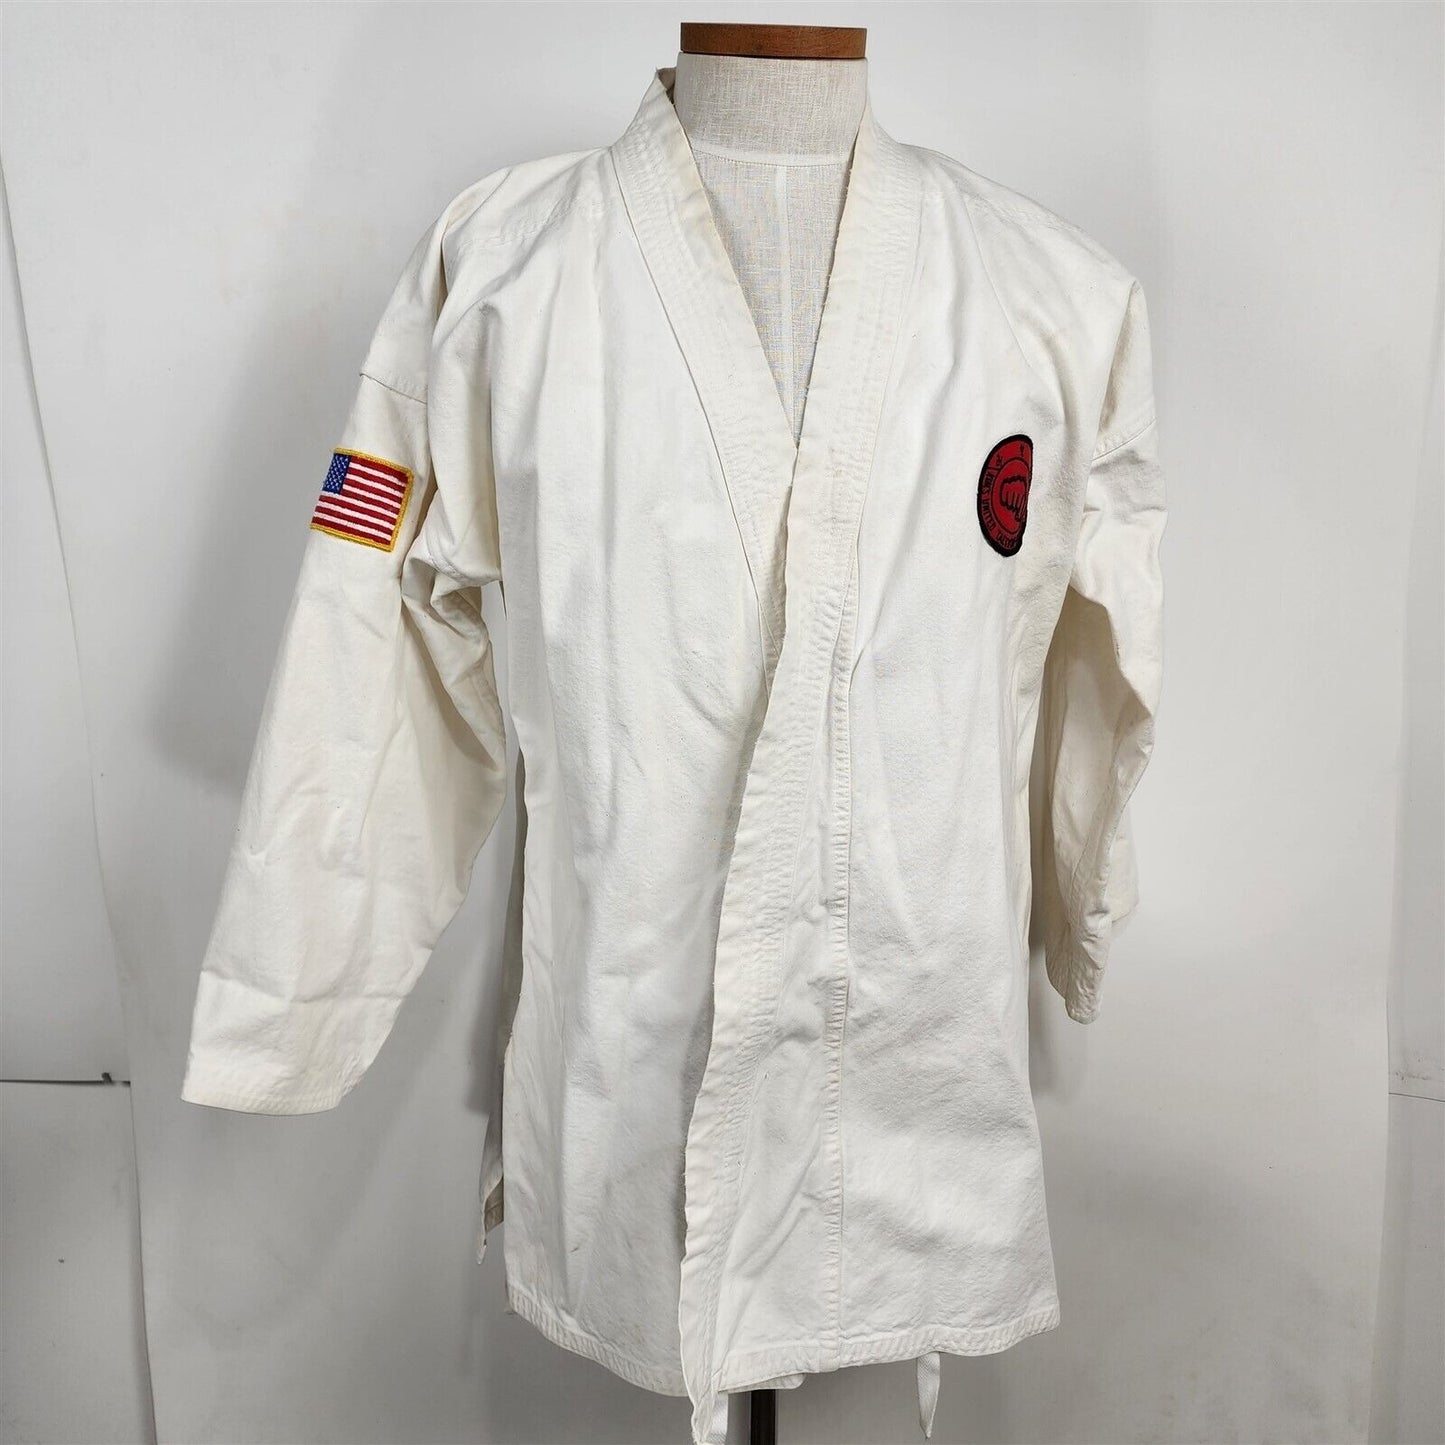 Vintage Genbudo Taekwondo Karate Uniform Top & Pants Martial Arts Size 6